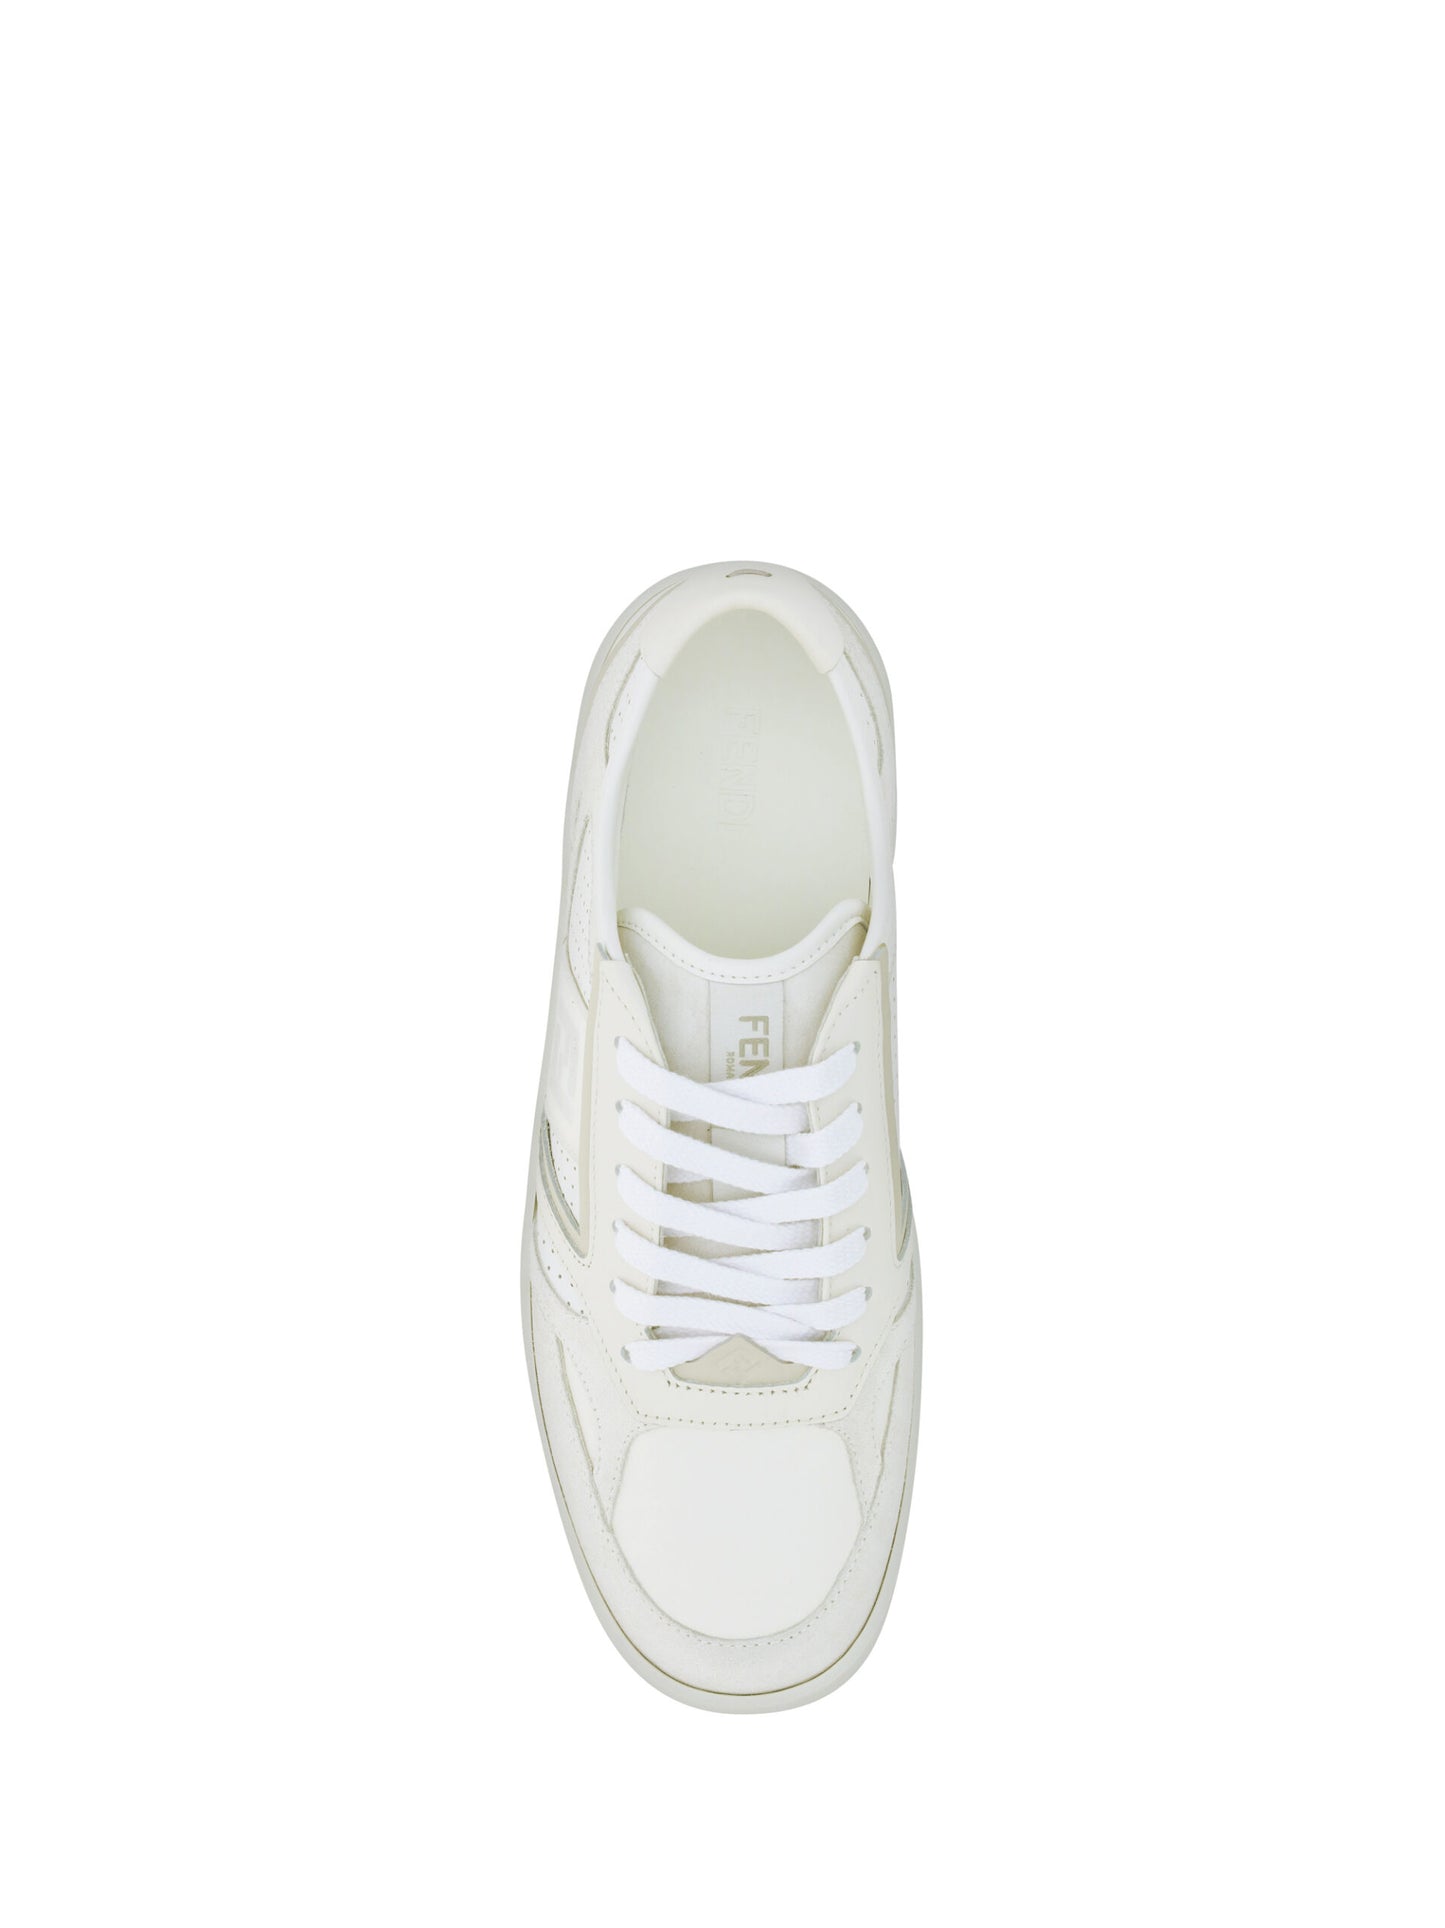 Elegant Low Top Calfskin Sneakers in White